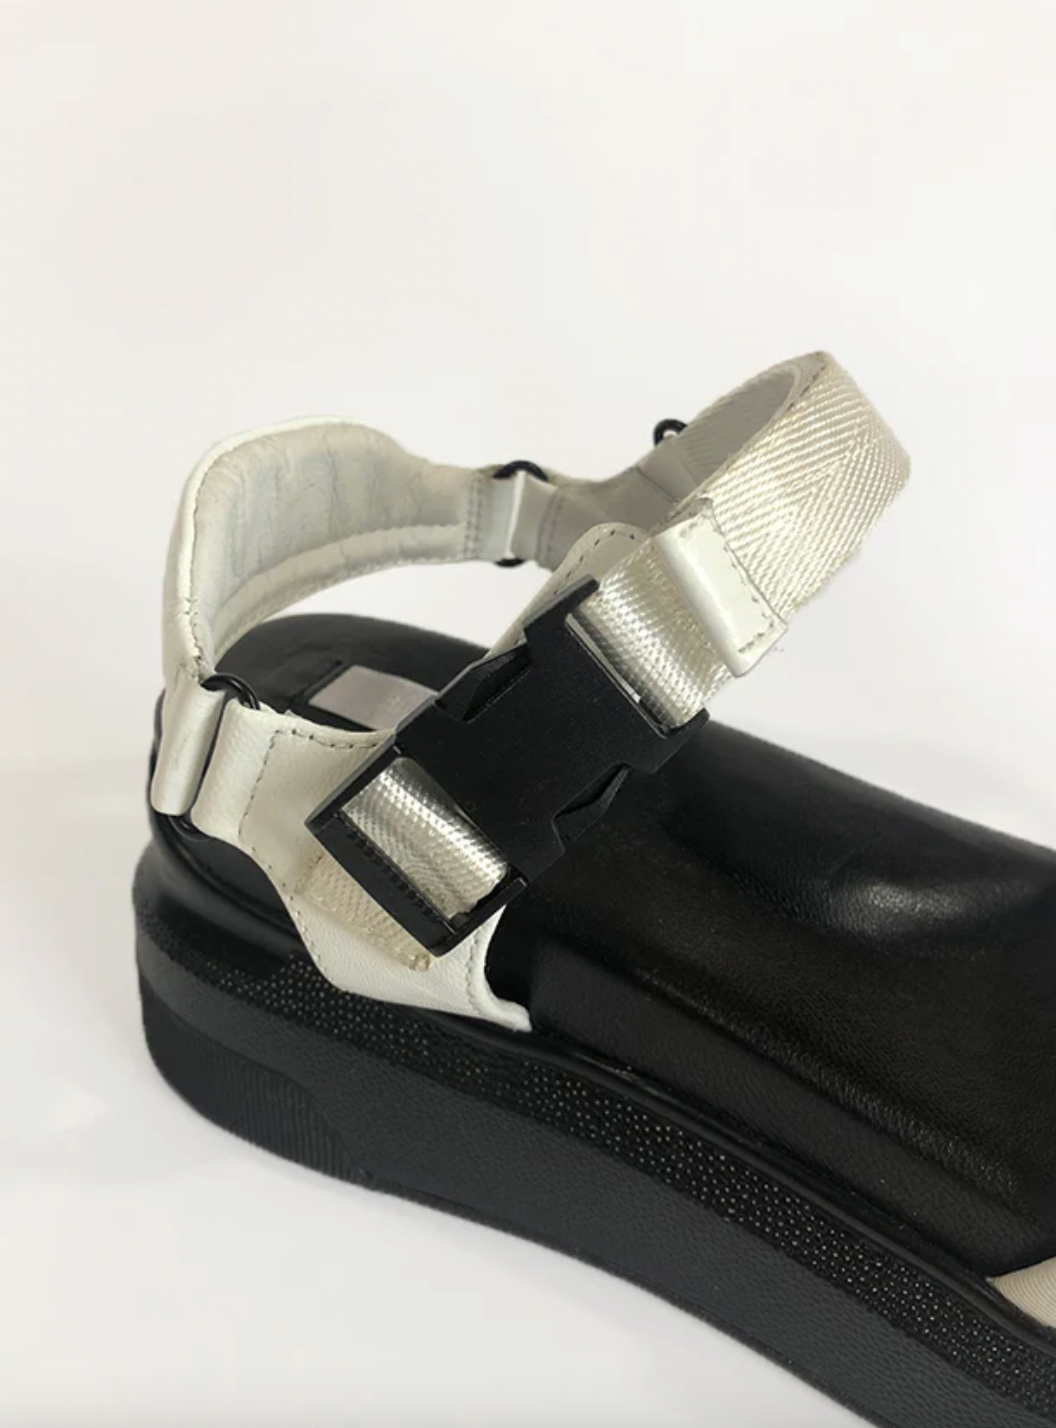 Product Image for Buckle Velcro Sandal, White/Black